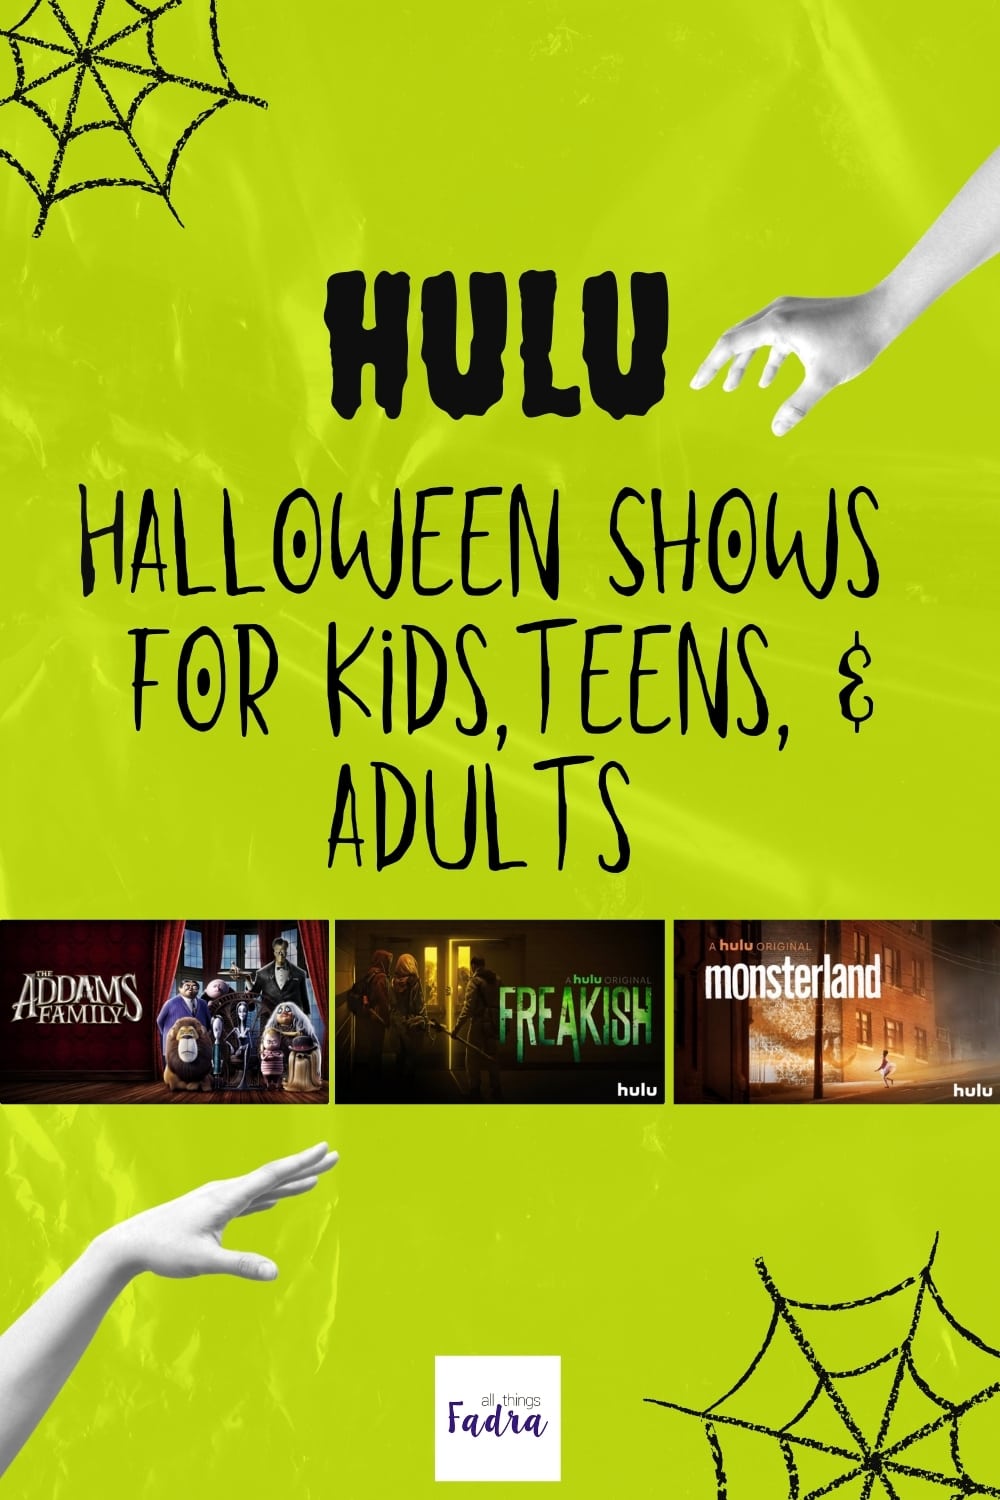 Hulu Halloween Shows for Kids, Teens, and Adults